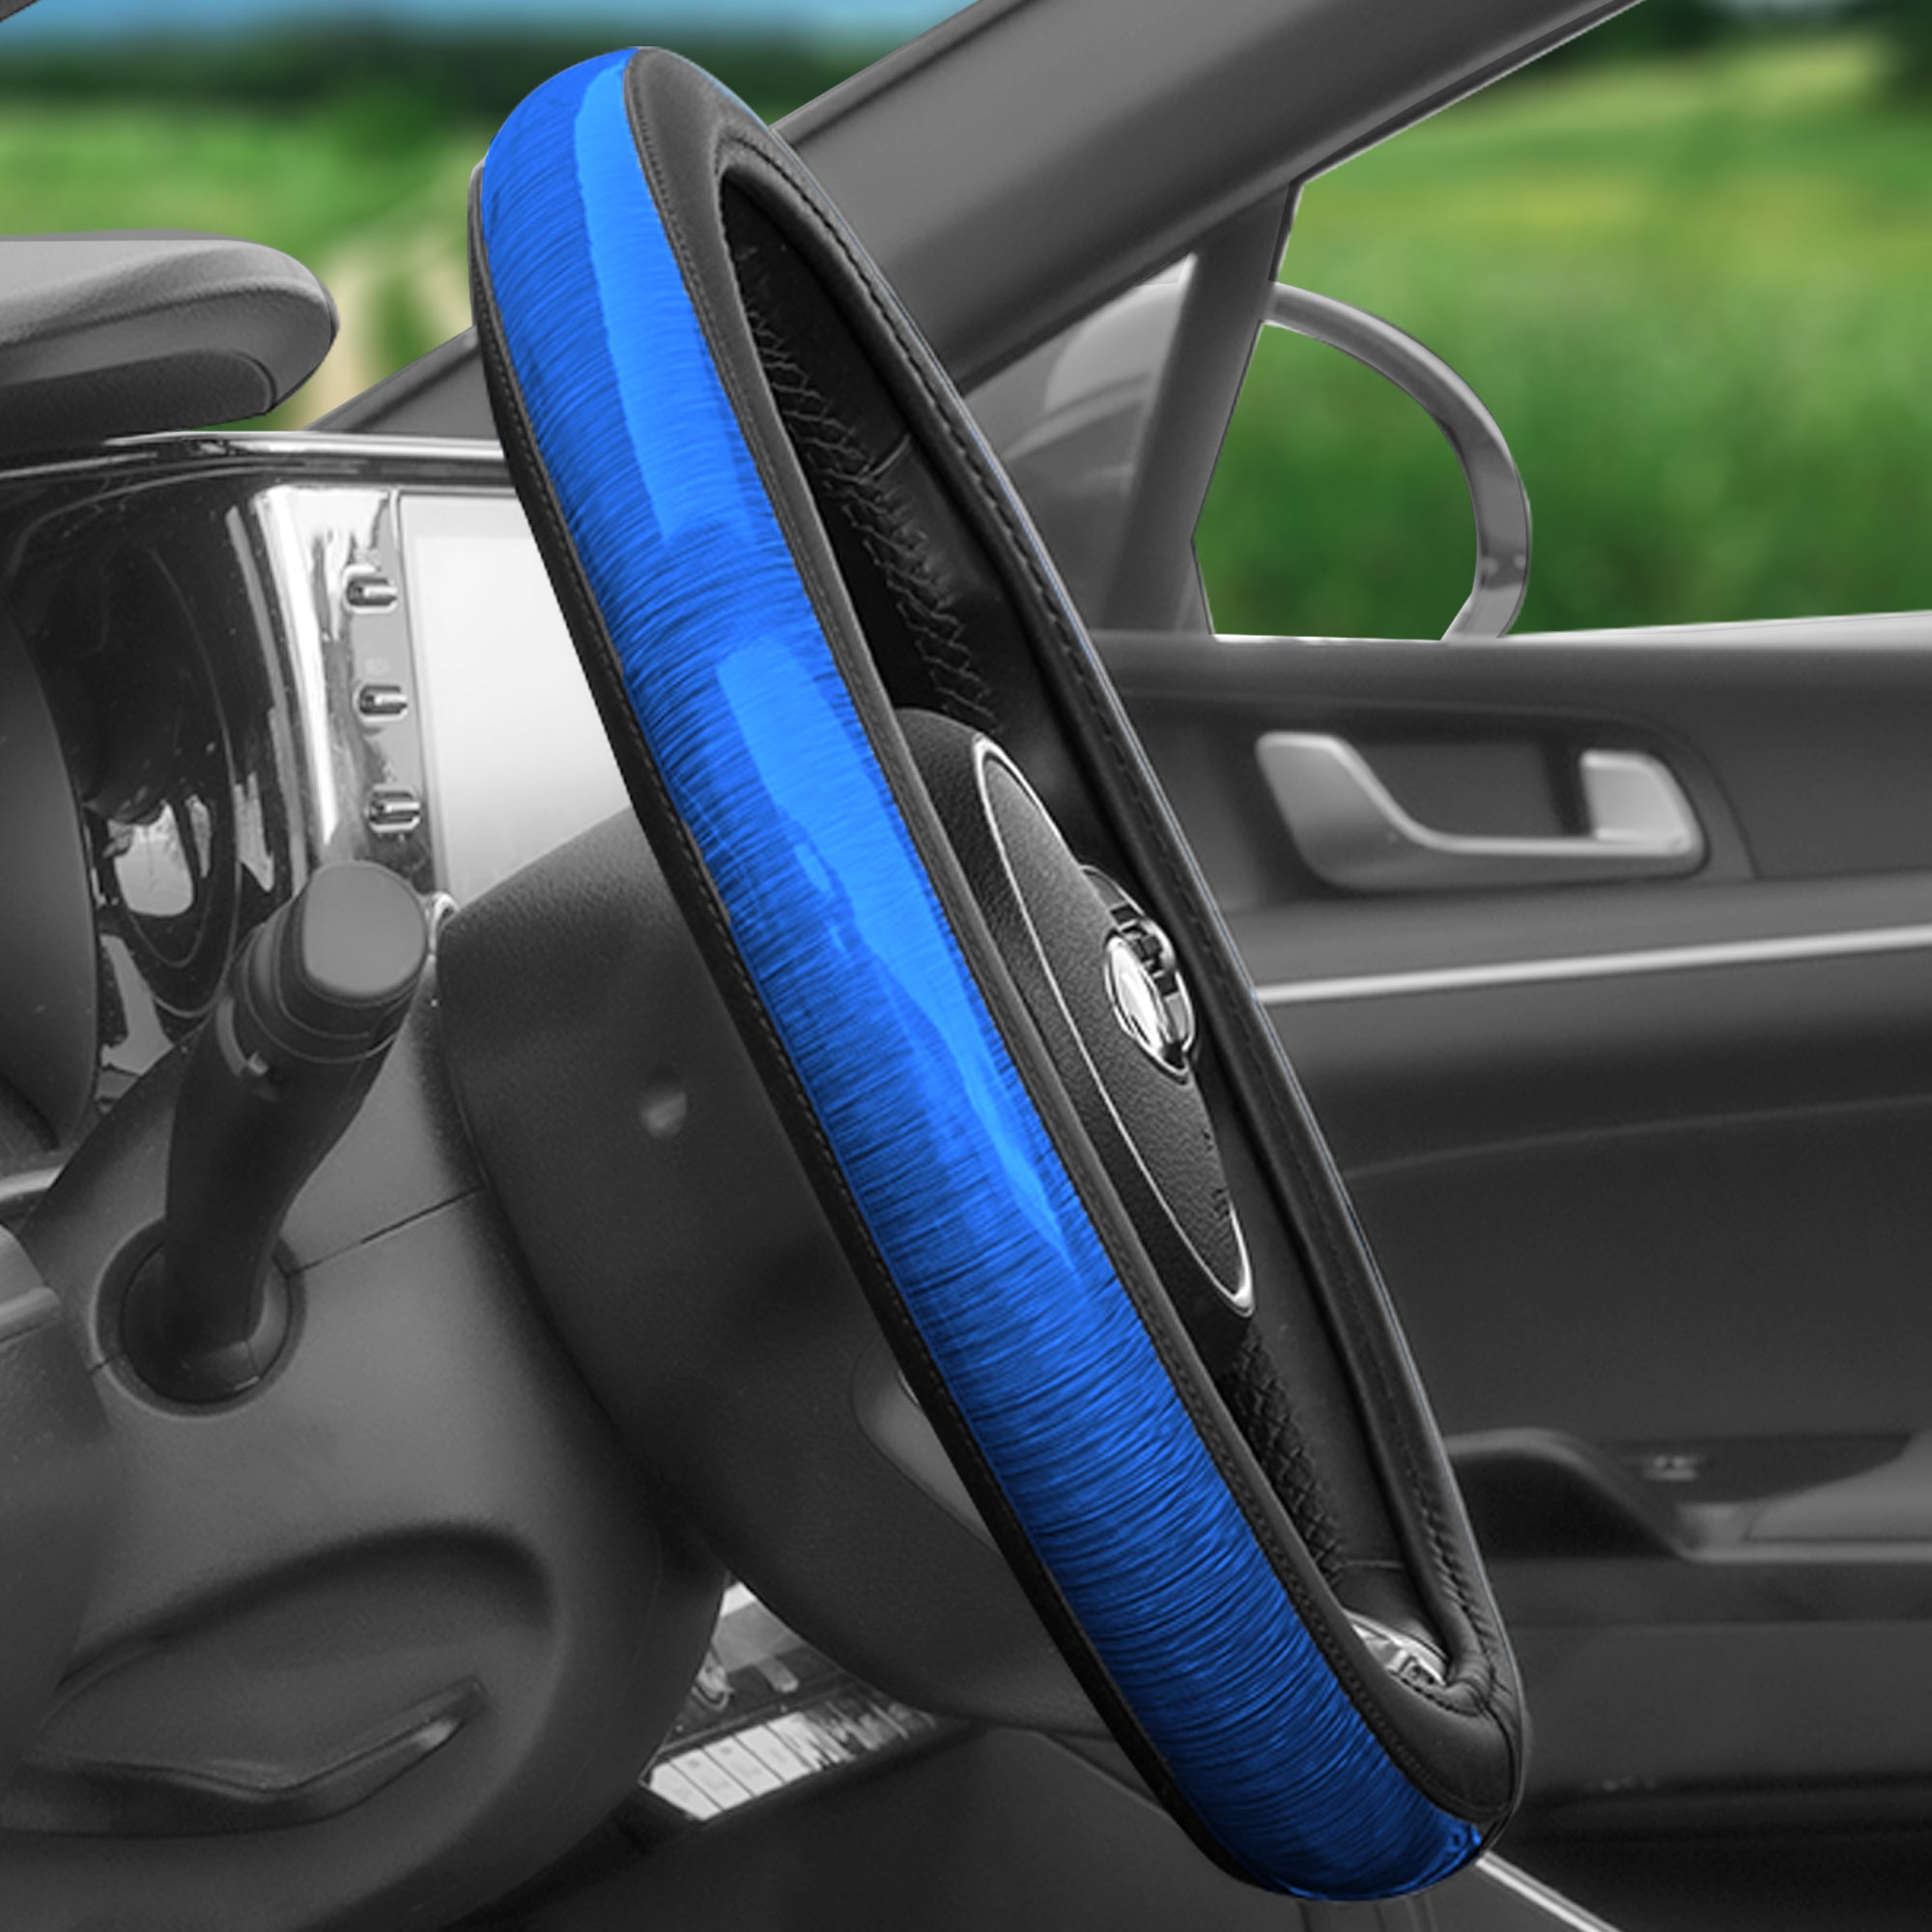 Galaxy13 Metallic Striped Steering Wheel Cover Blue